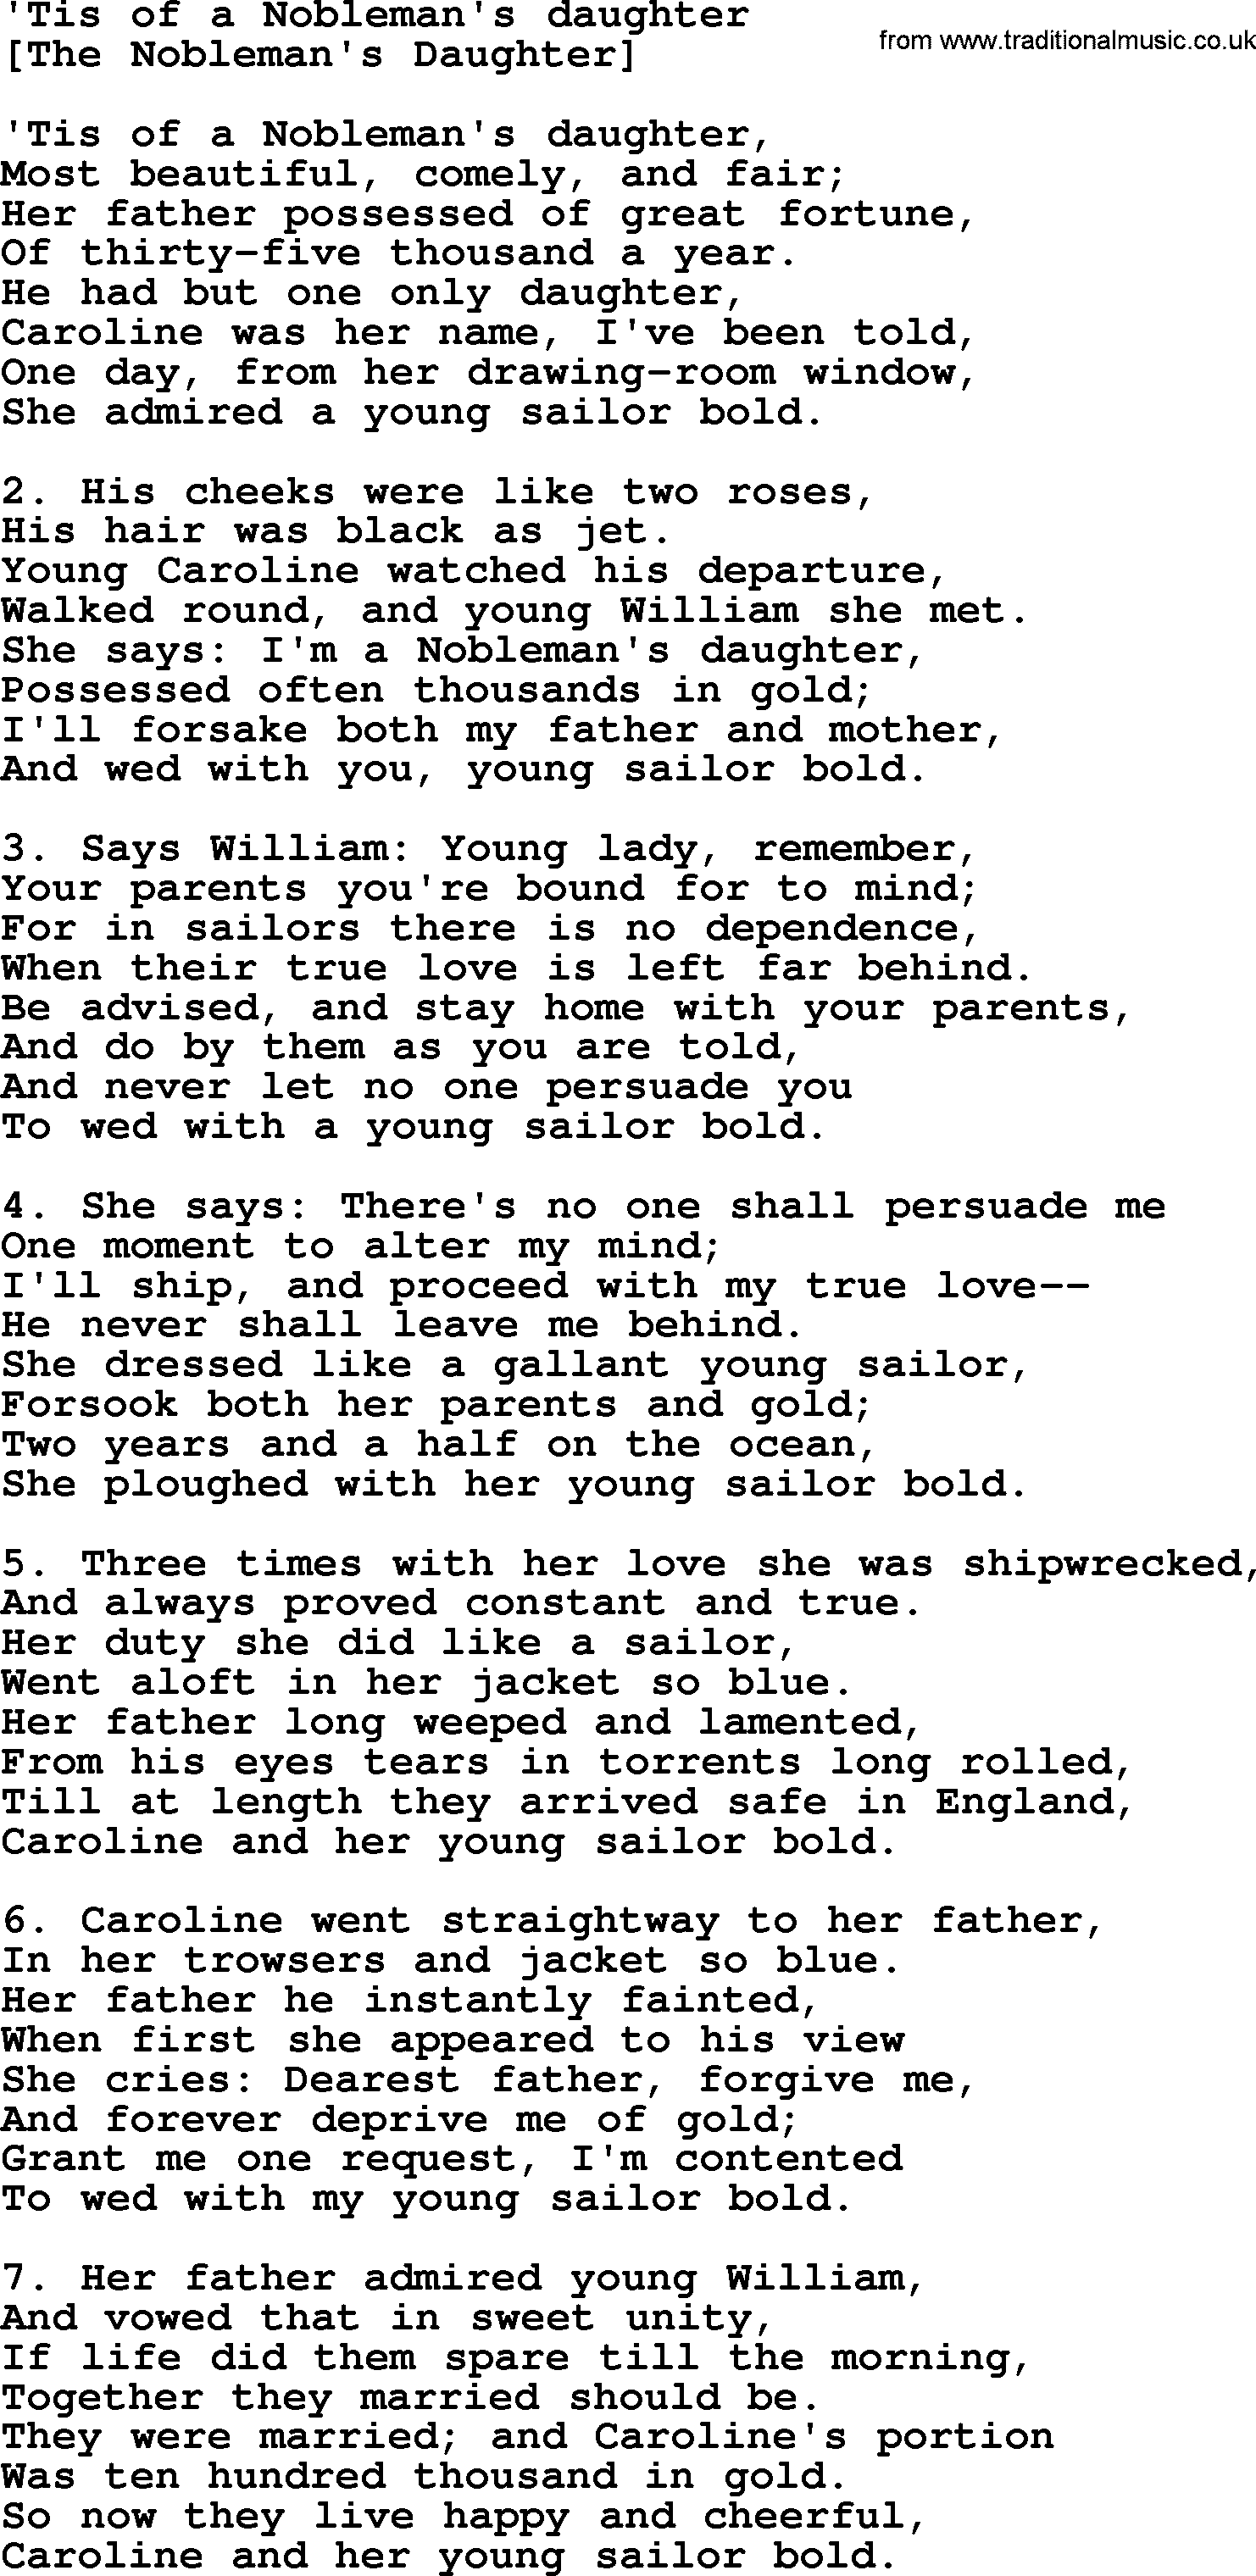 Old English Song: 'Tis Of A Nobleman's Daughter lyrics